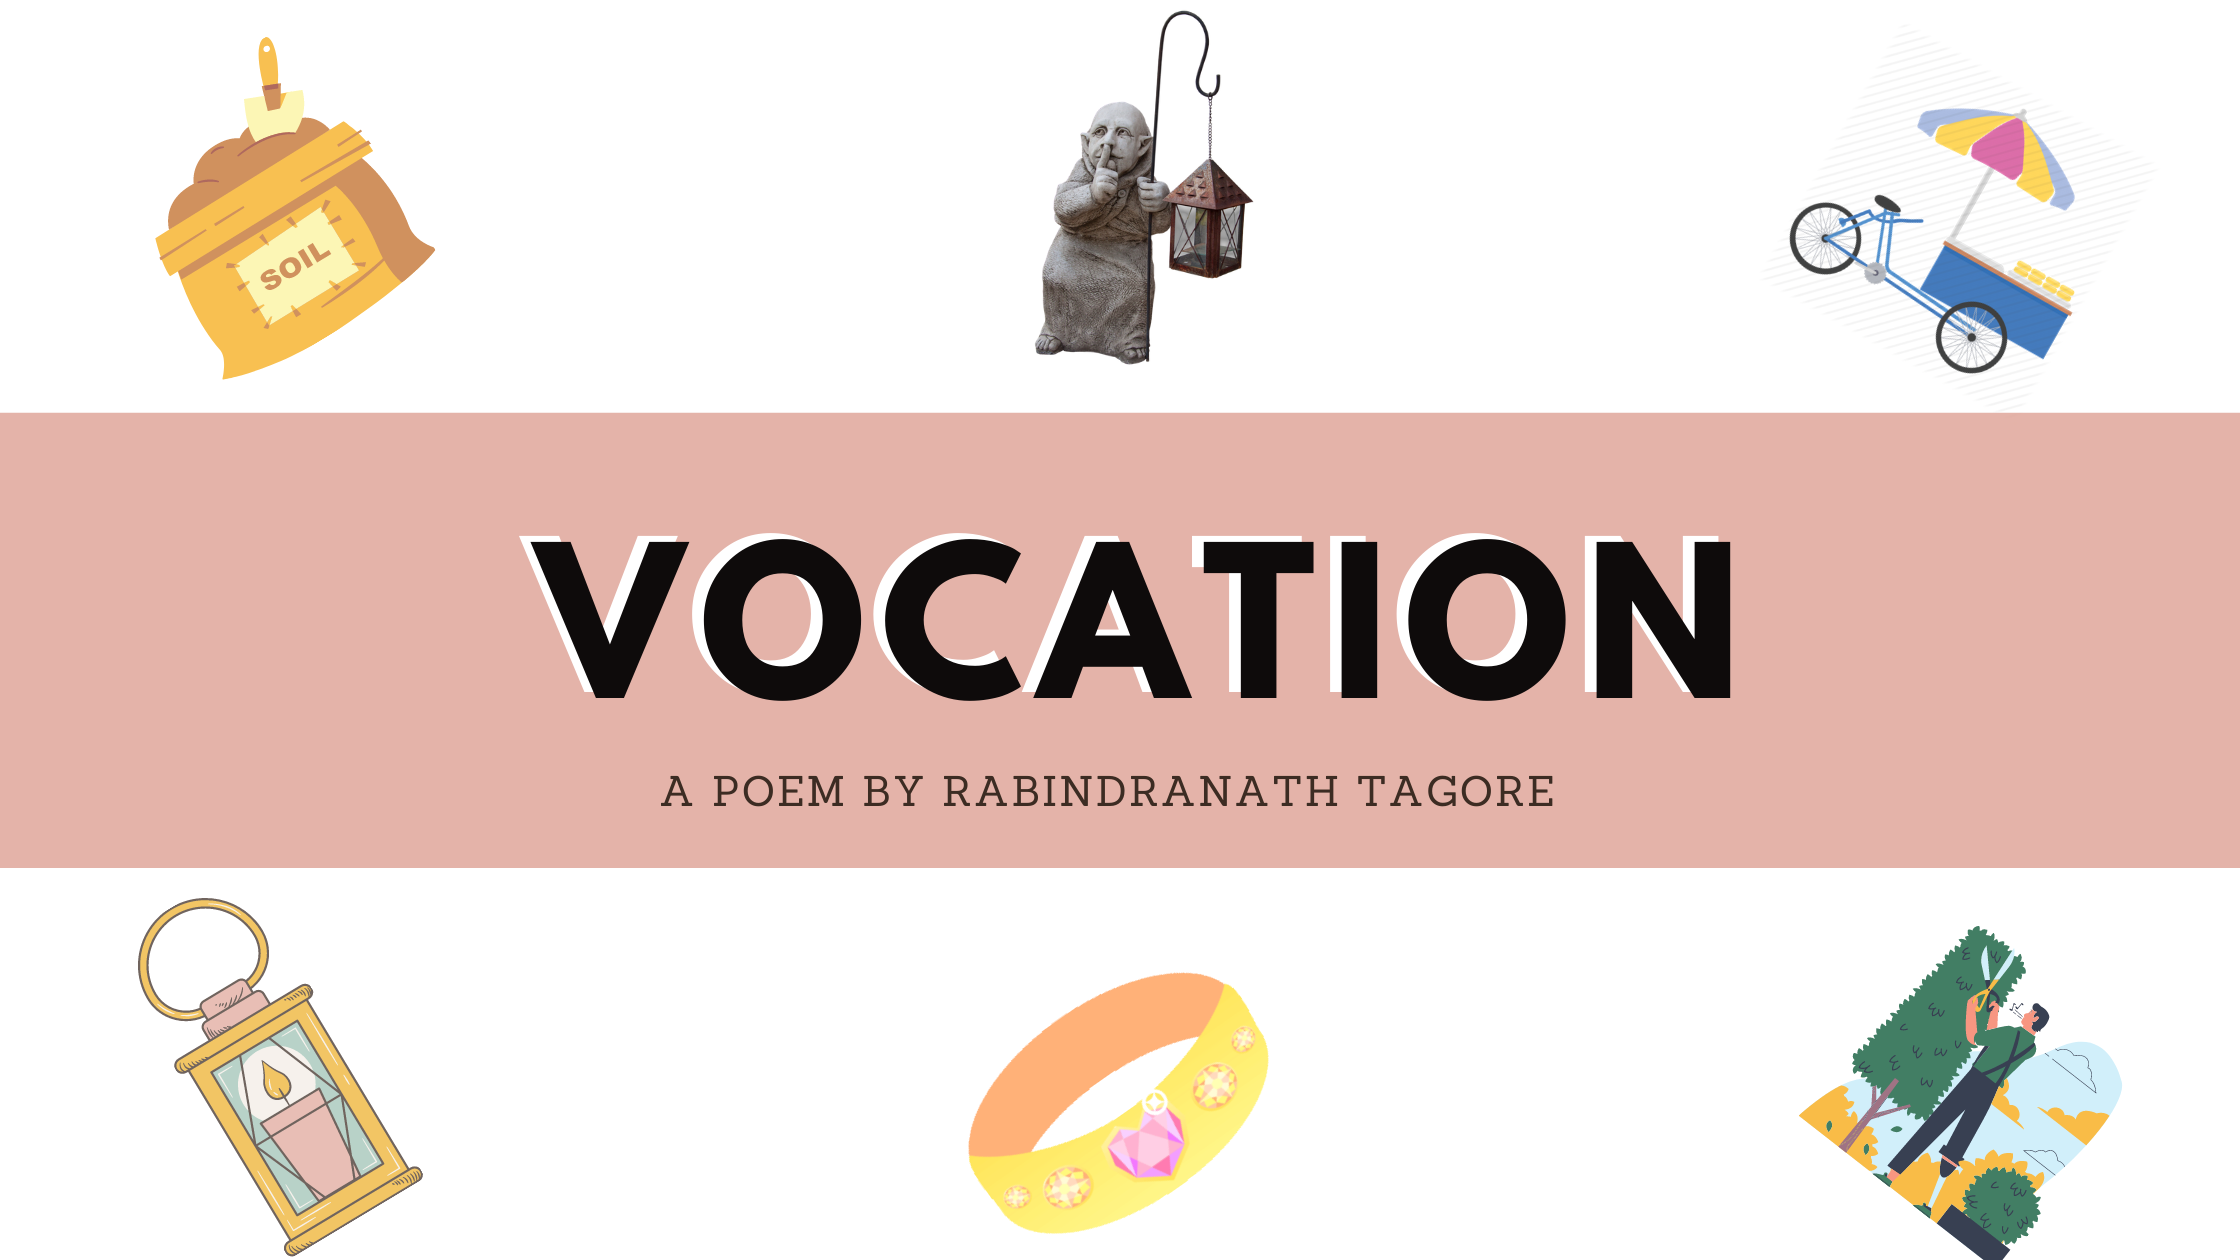 vocation poem by rabindranath tagore